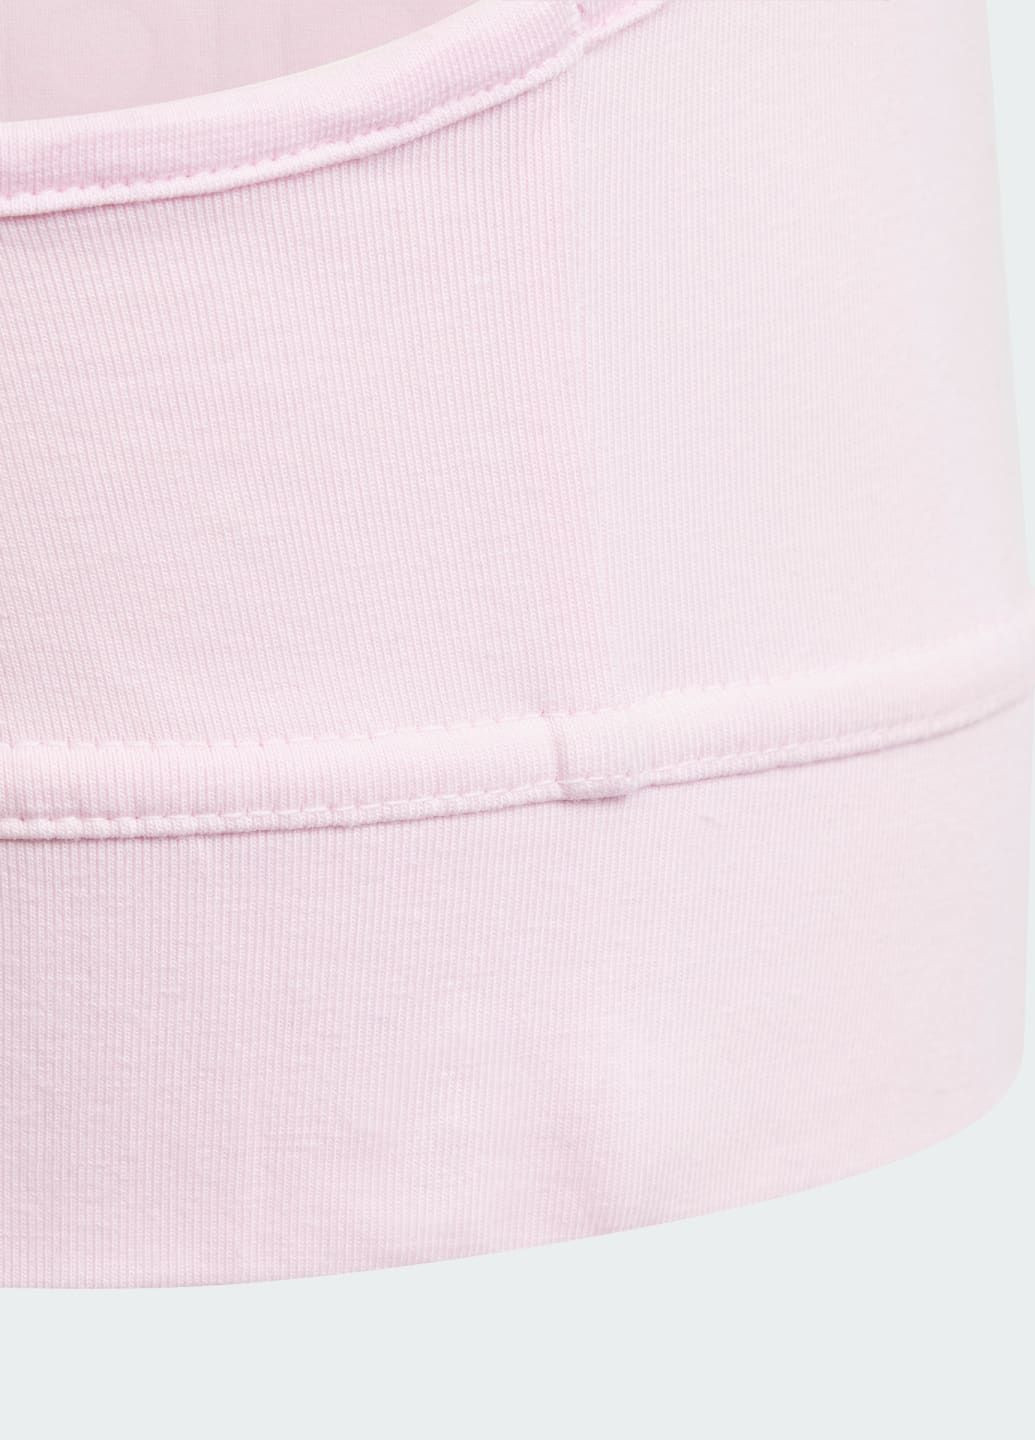 Рожевий бра essentials linear logo cotton adidas